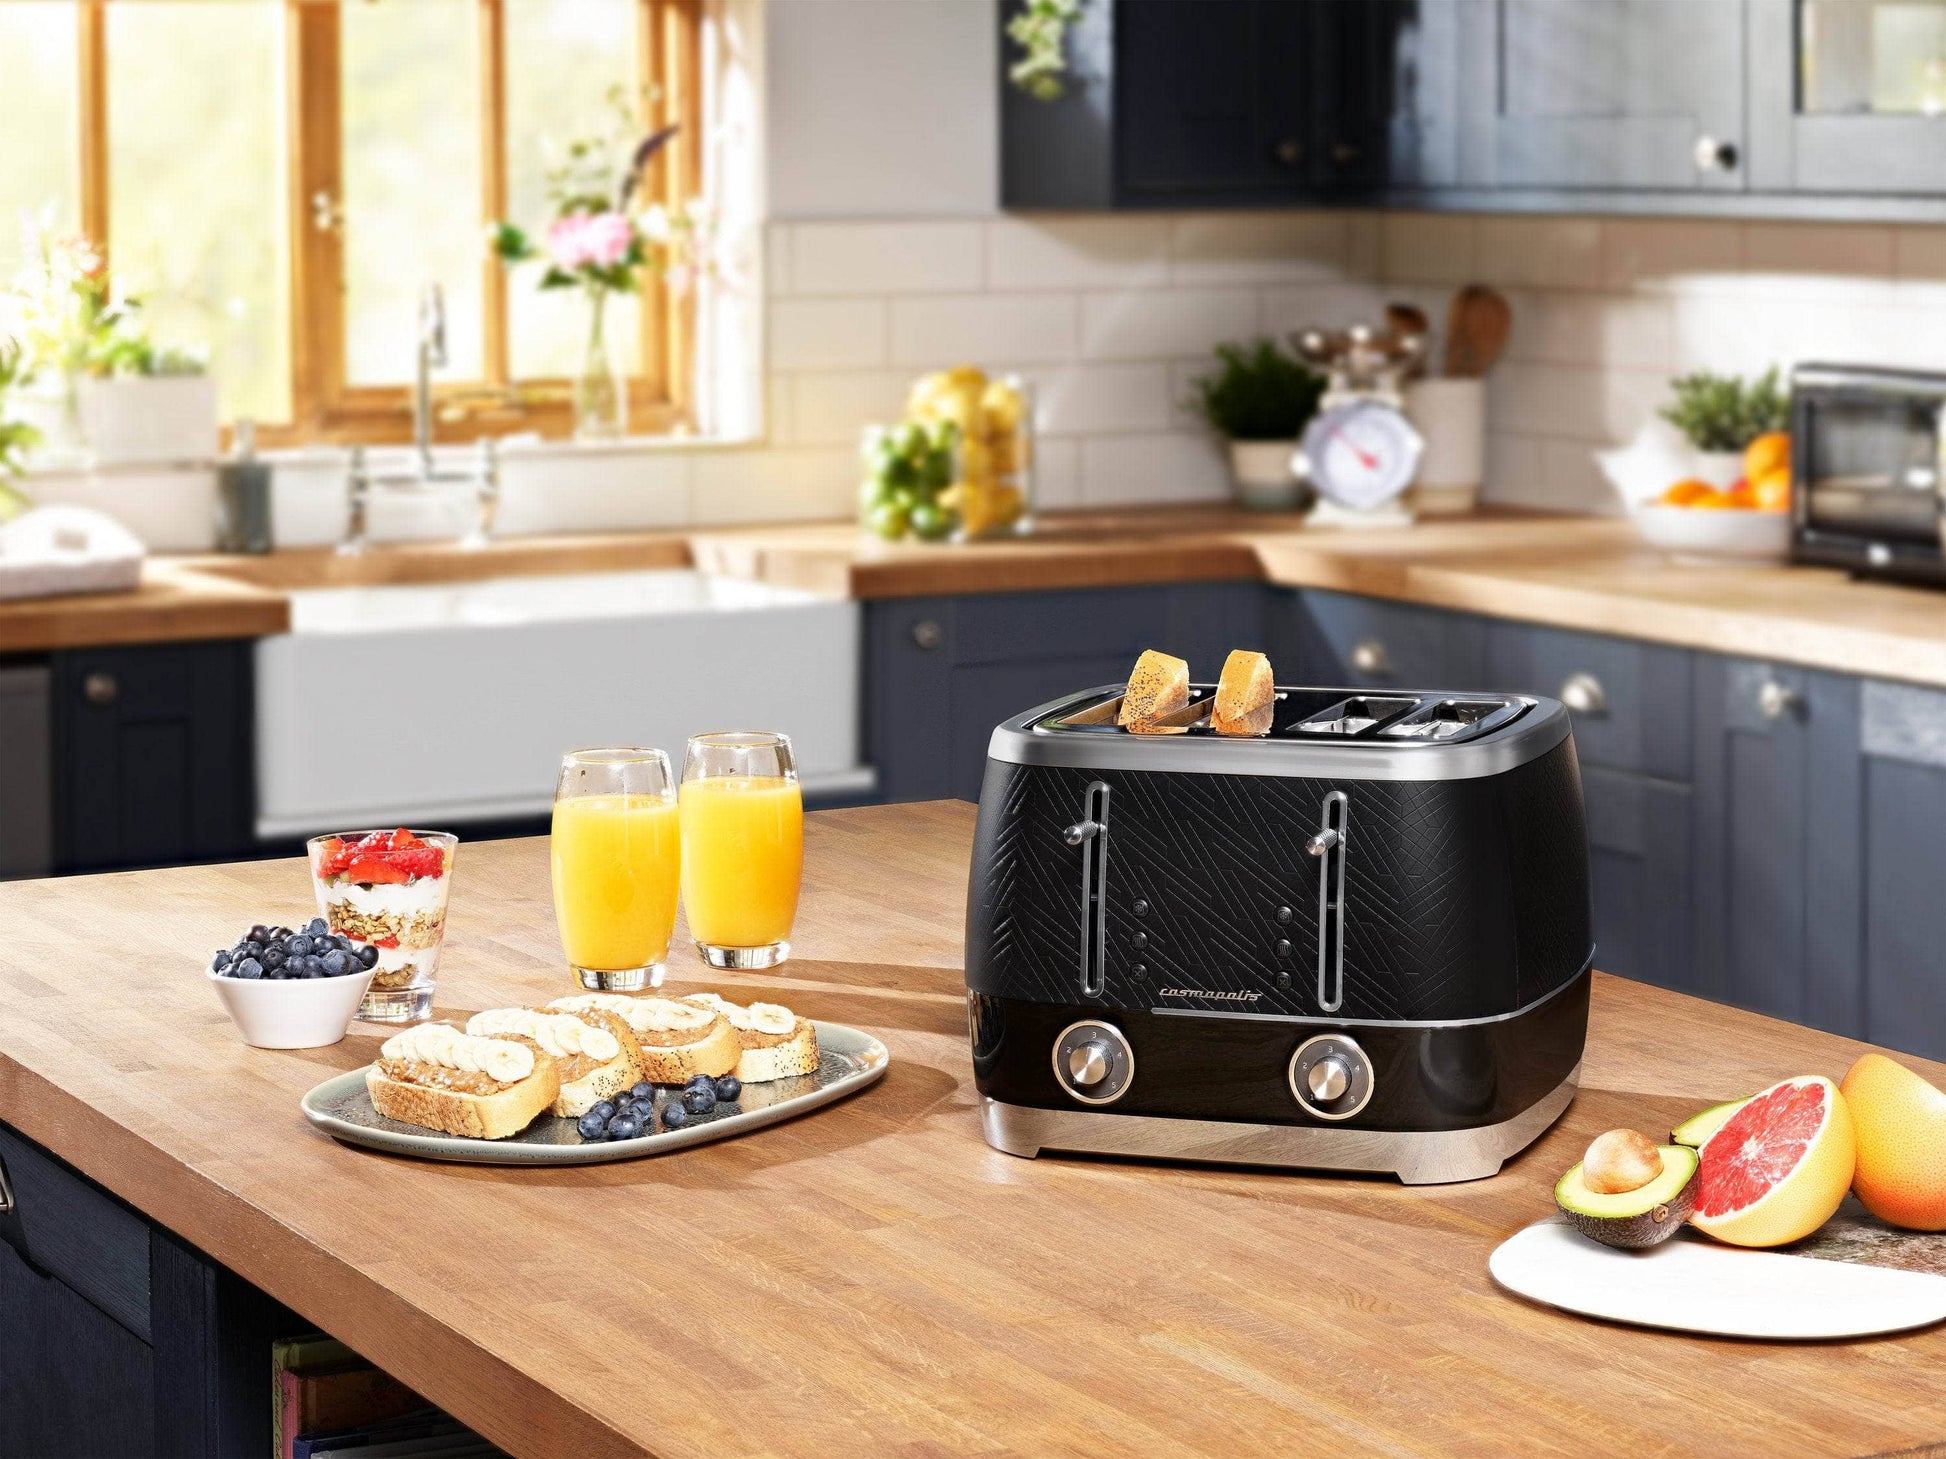 Kitchenware  -  Beko 4 Slice Toaster - Black & Chrome  -  60005230